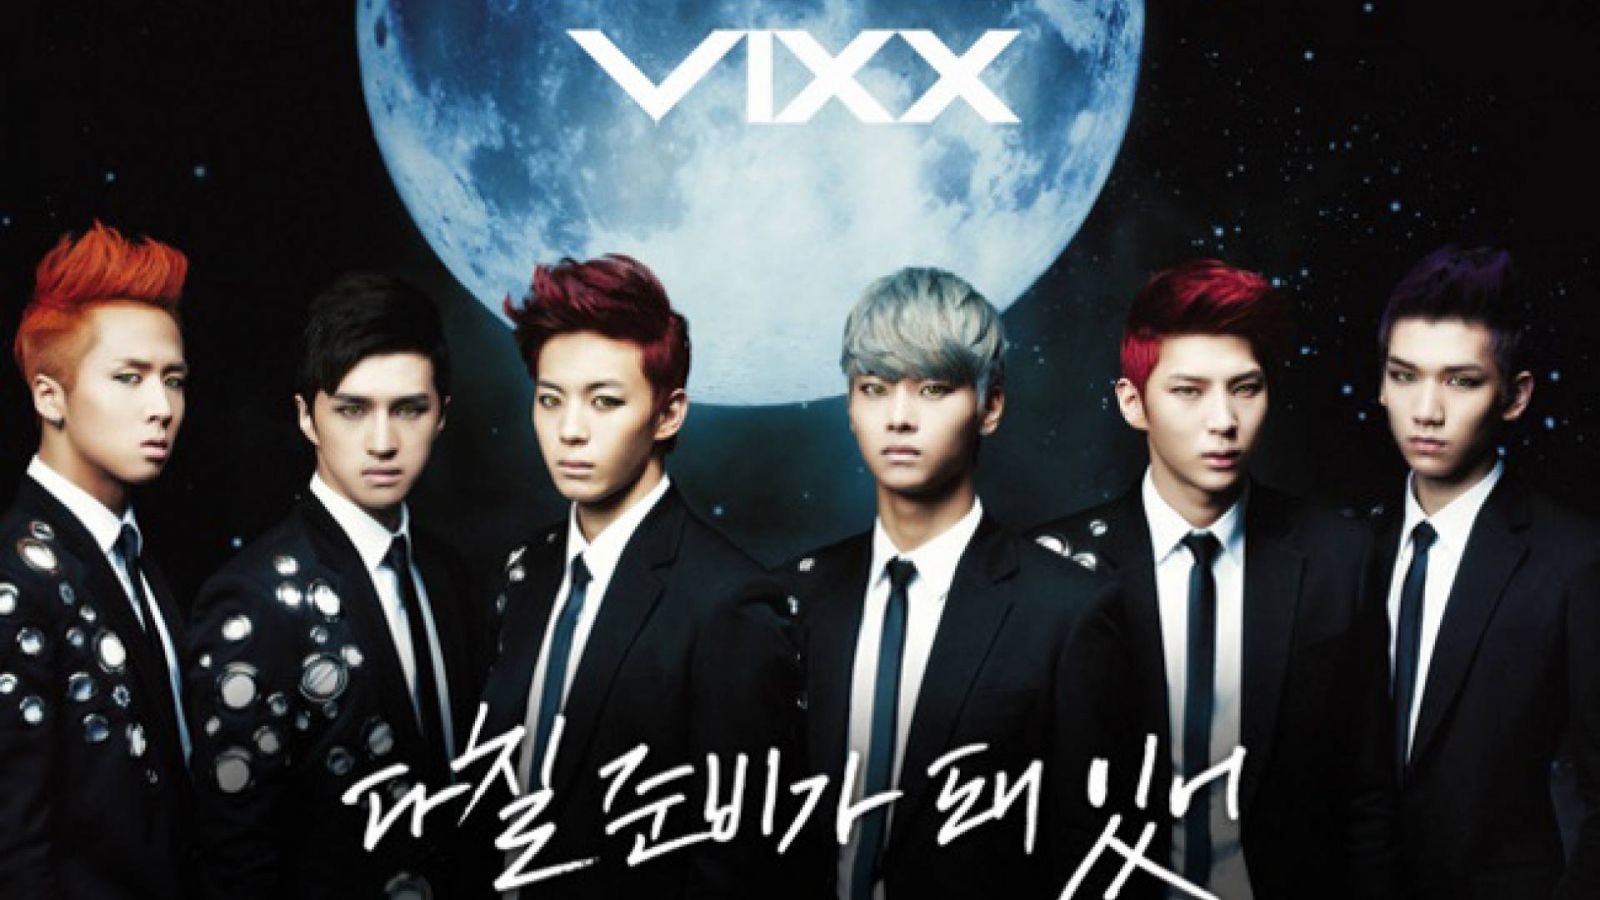 Music Video Teaser from VIXX © Jellyfish Entertainment